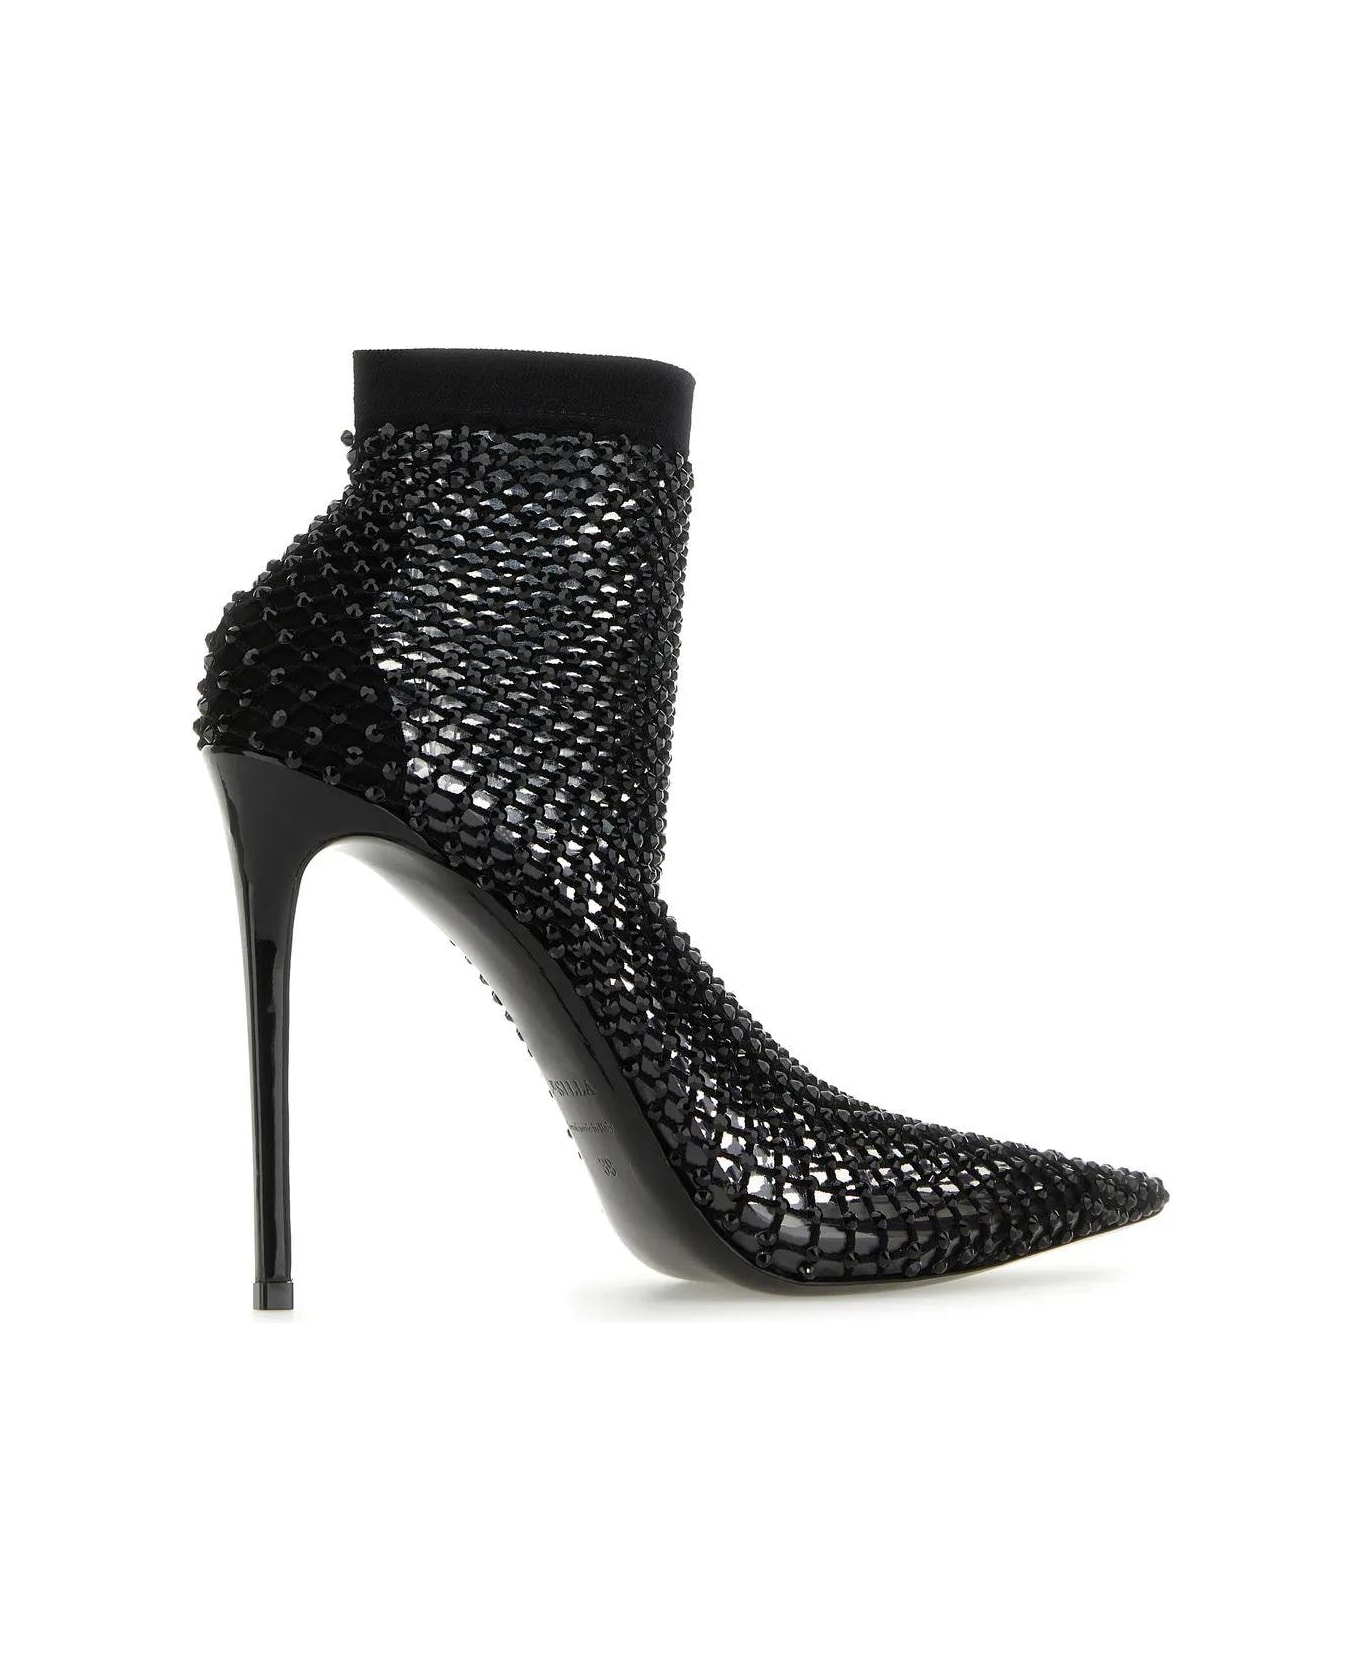 Le Silla Black Mesh Gilda Ankle Boots - Black ハイヒール